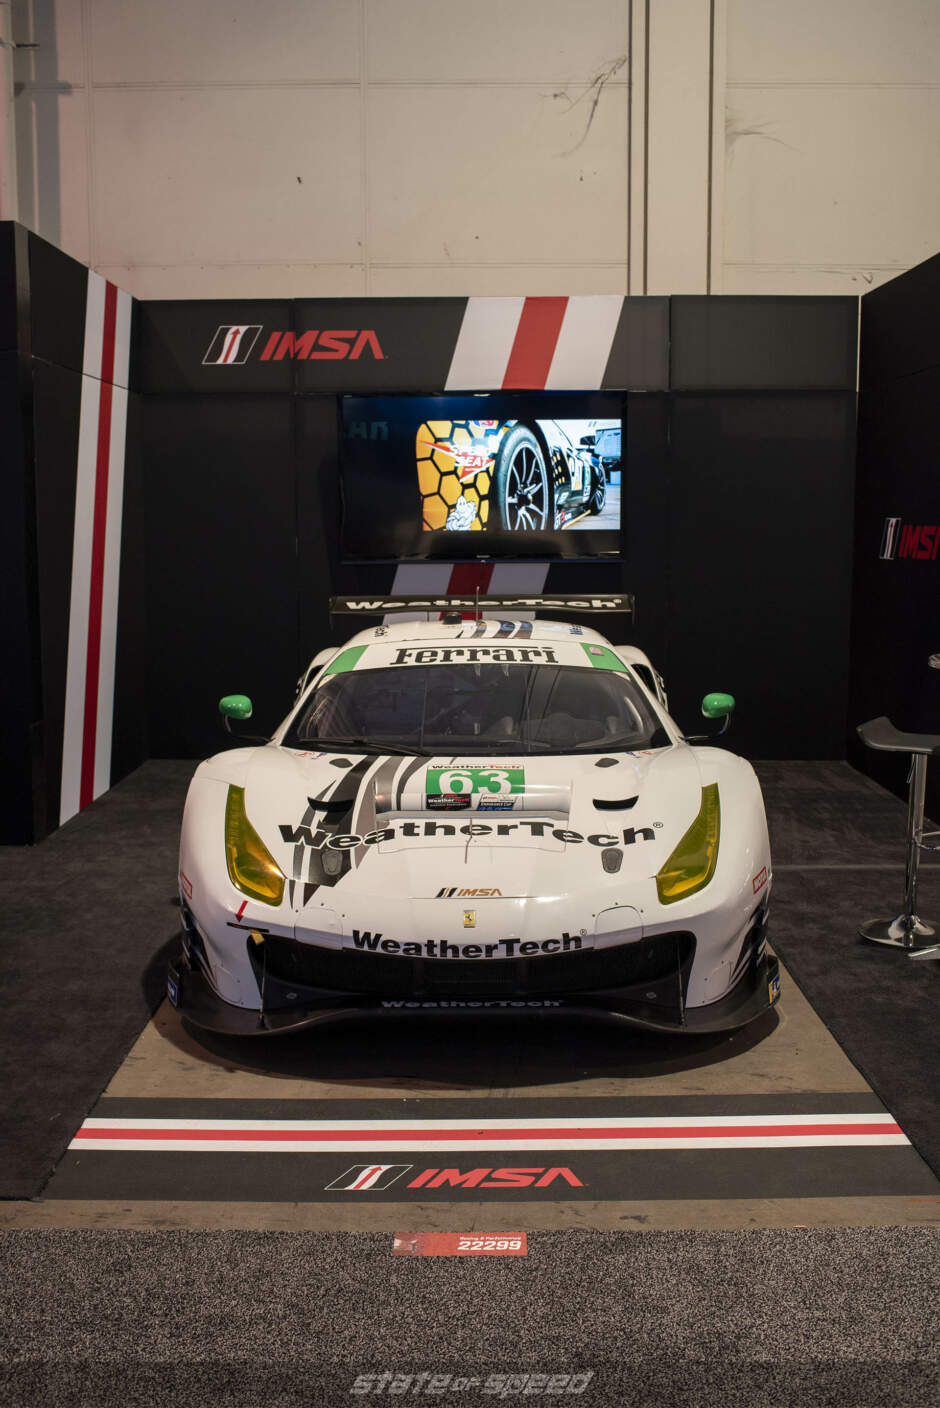 IMSA Racing booth showcasing Weathertech Ferrari GT car